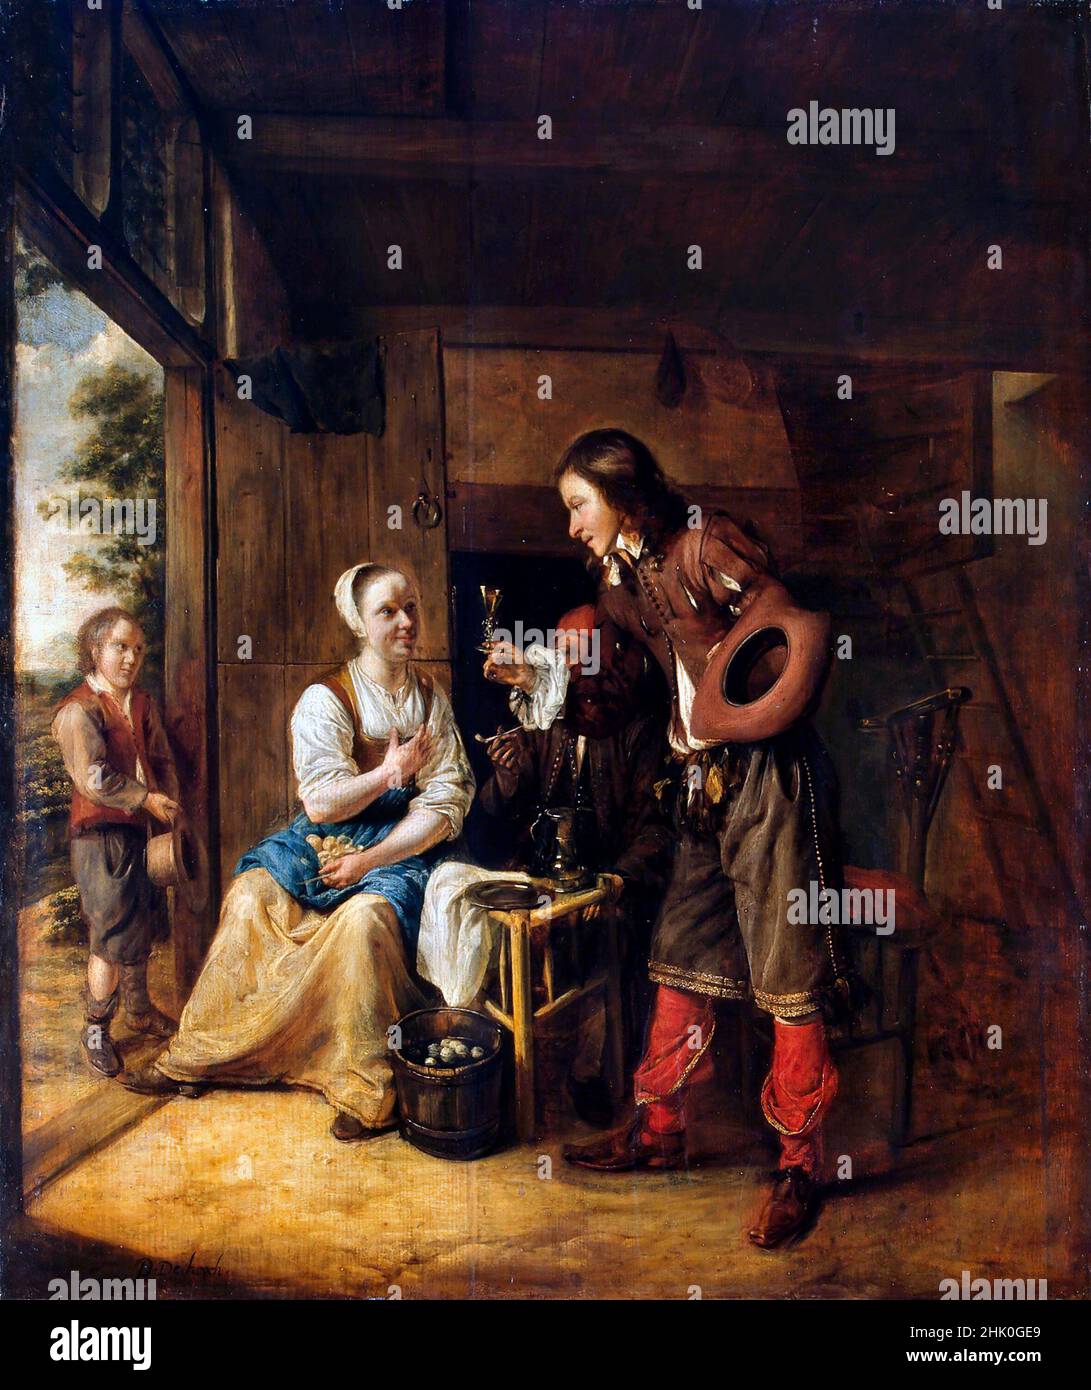 Pieter de Hooch. Painting entitled 'Soldier Offering a Woman a Glass of Wine' by the Dutch Golden Age painter, Pieter de Hooch (1629-1684), oil on panel, c. 1653 Stock Photo